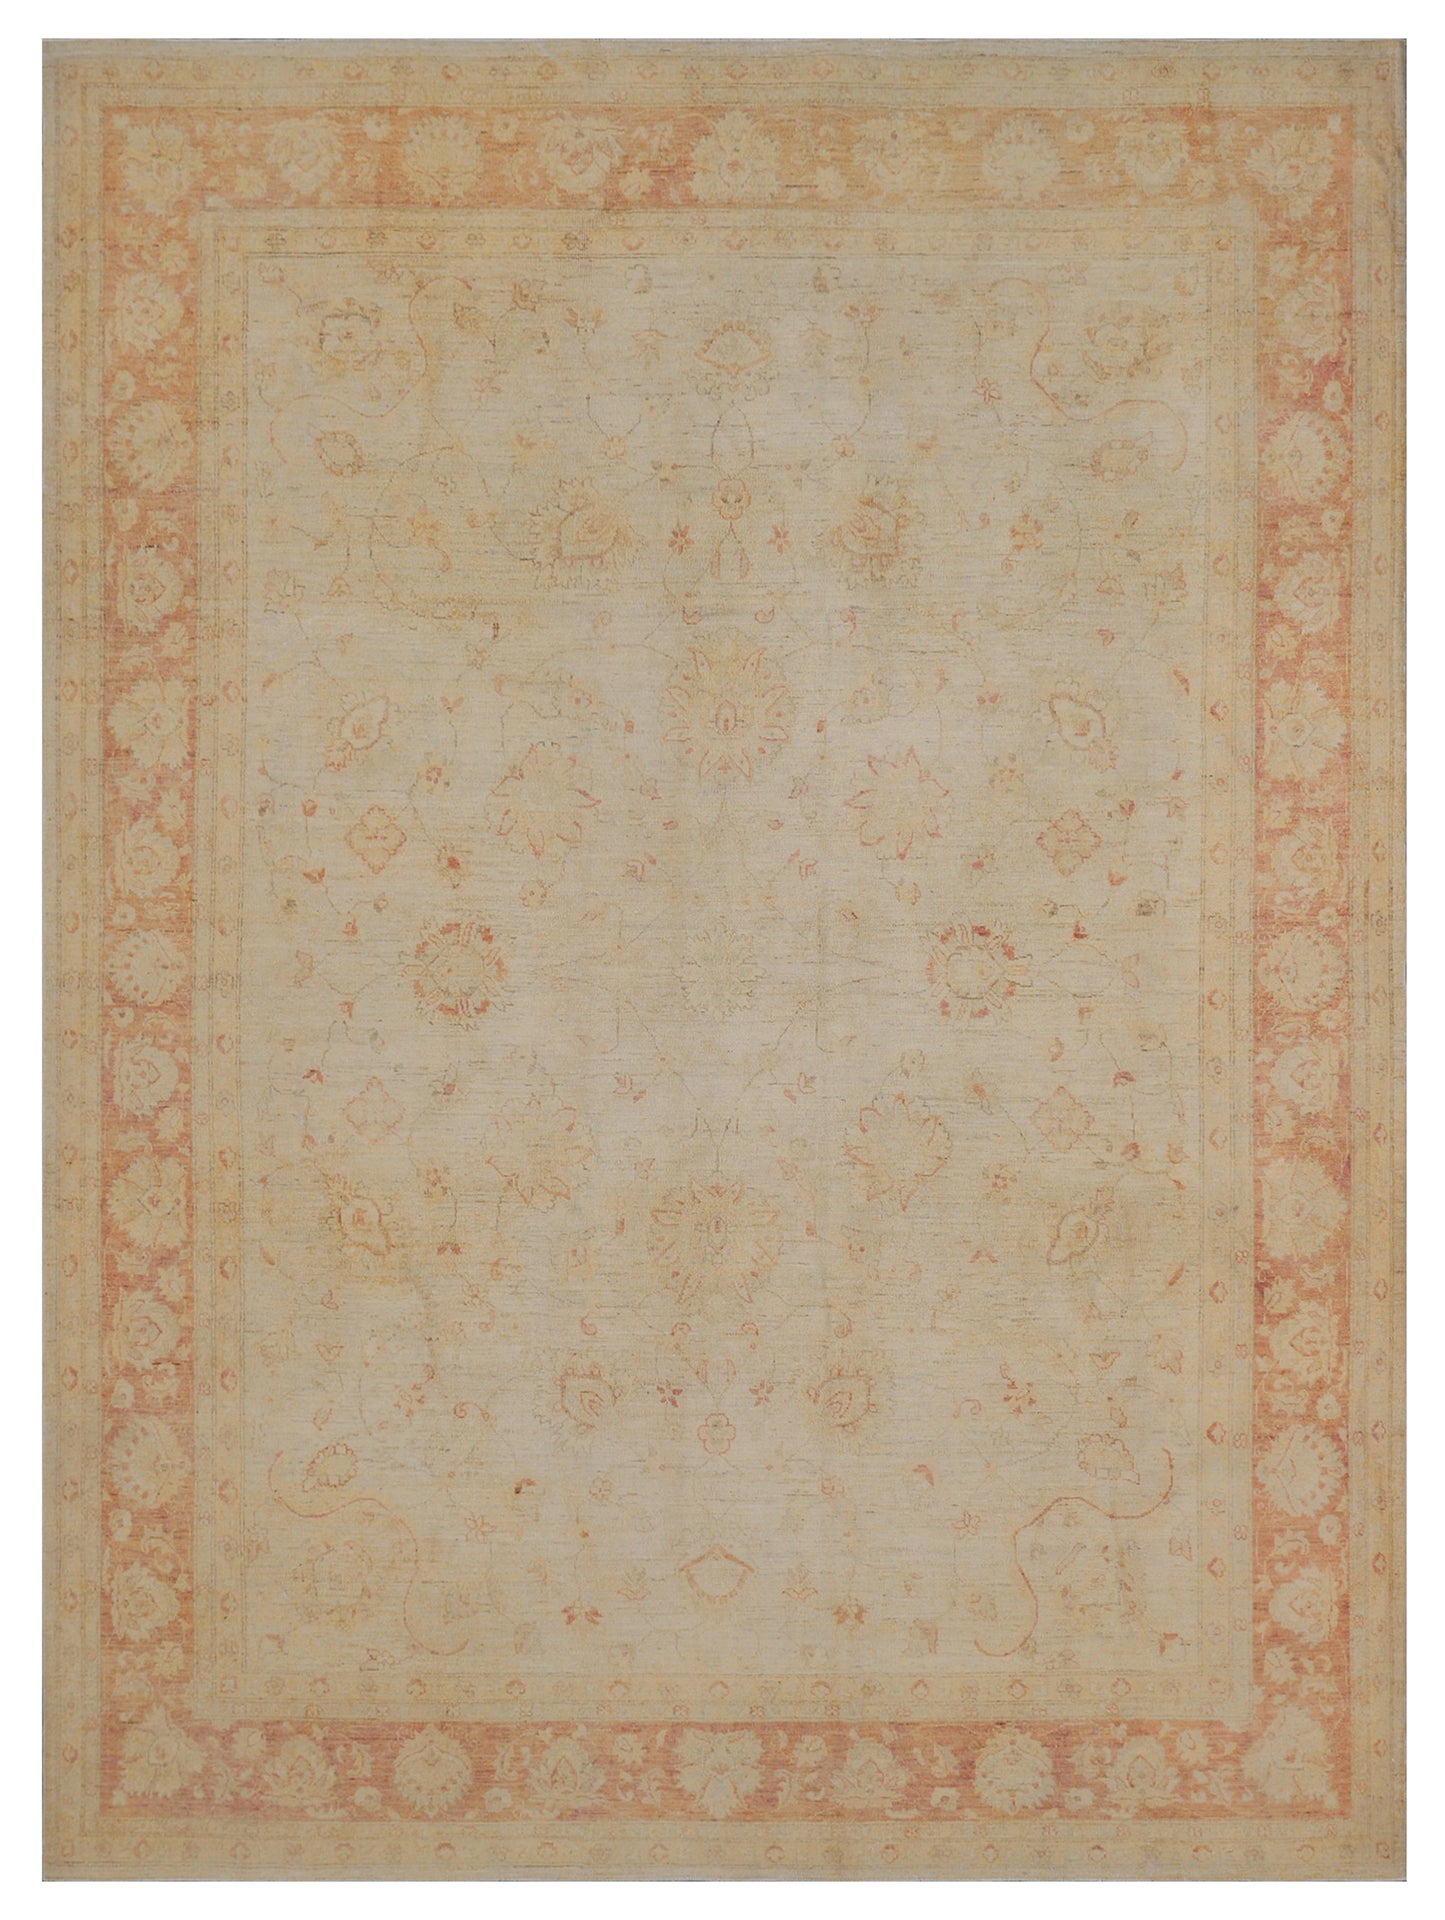 12'x9' Ariana Traditional Agra Design Rug